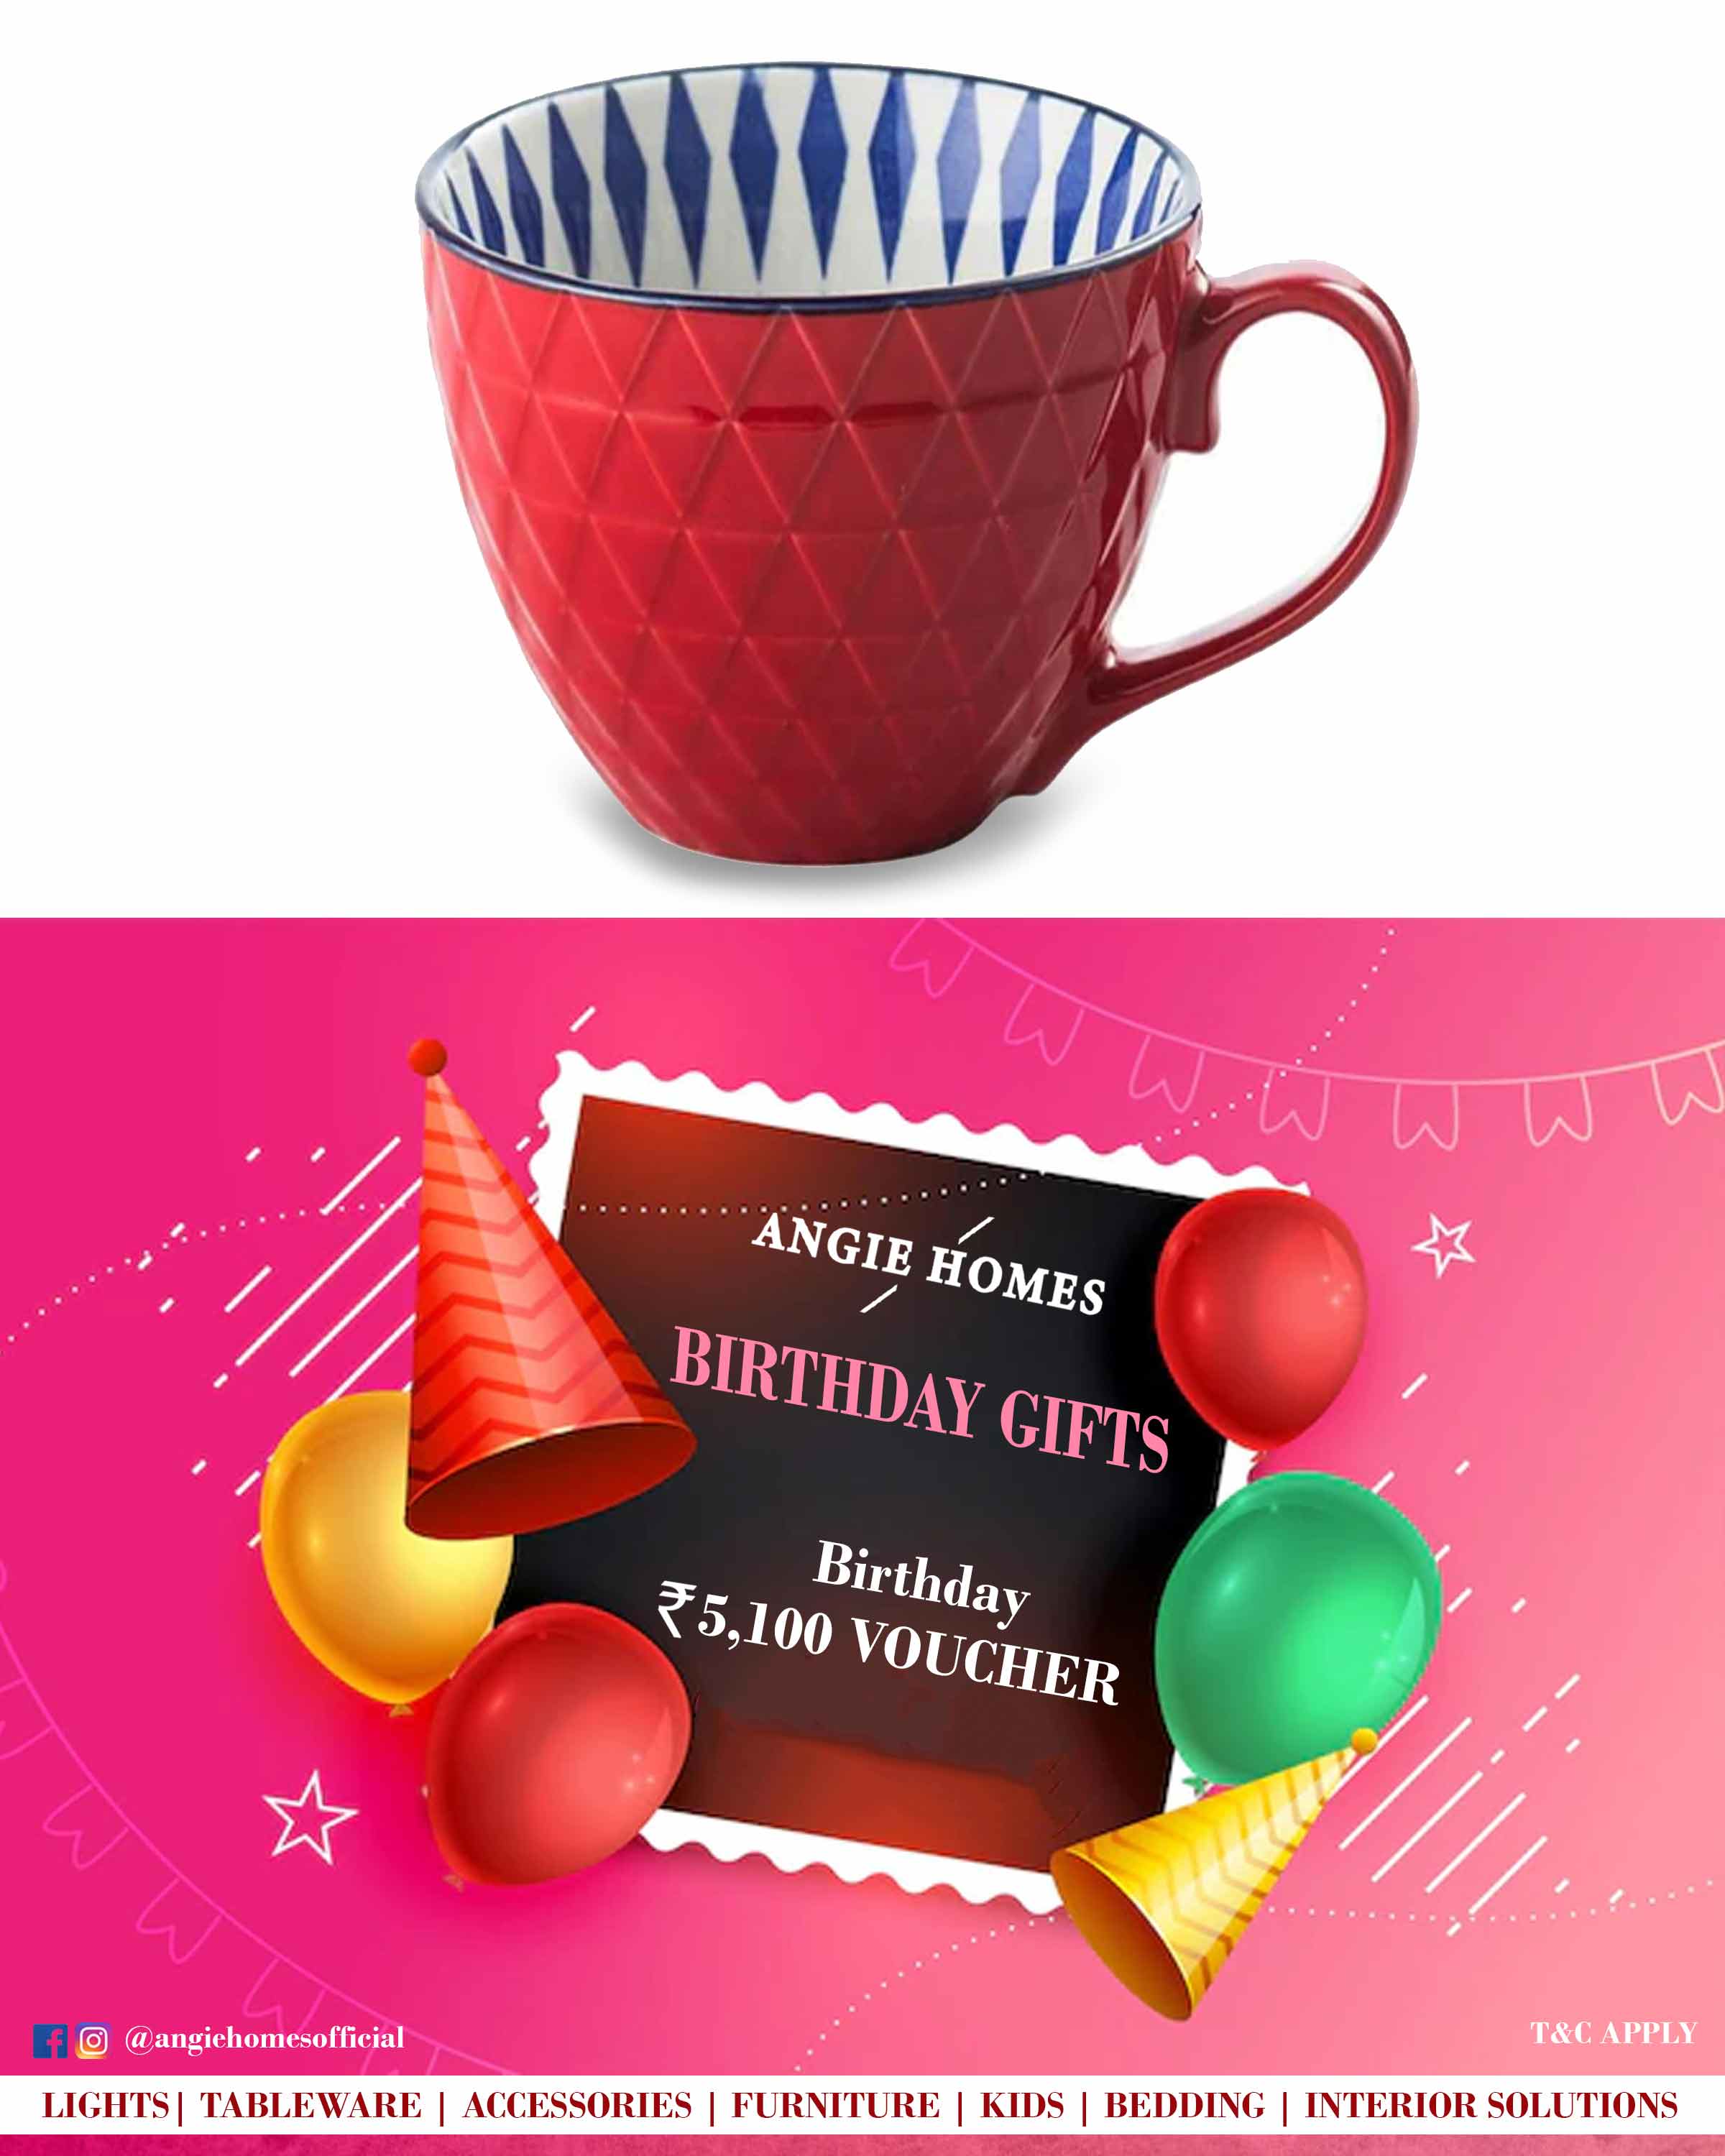 Baby Tableware | Happy Birthday Gift Voucher for Kids Coffee Mug ANGIE HOMES